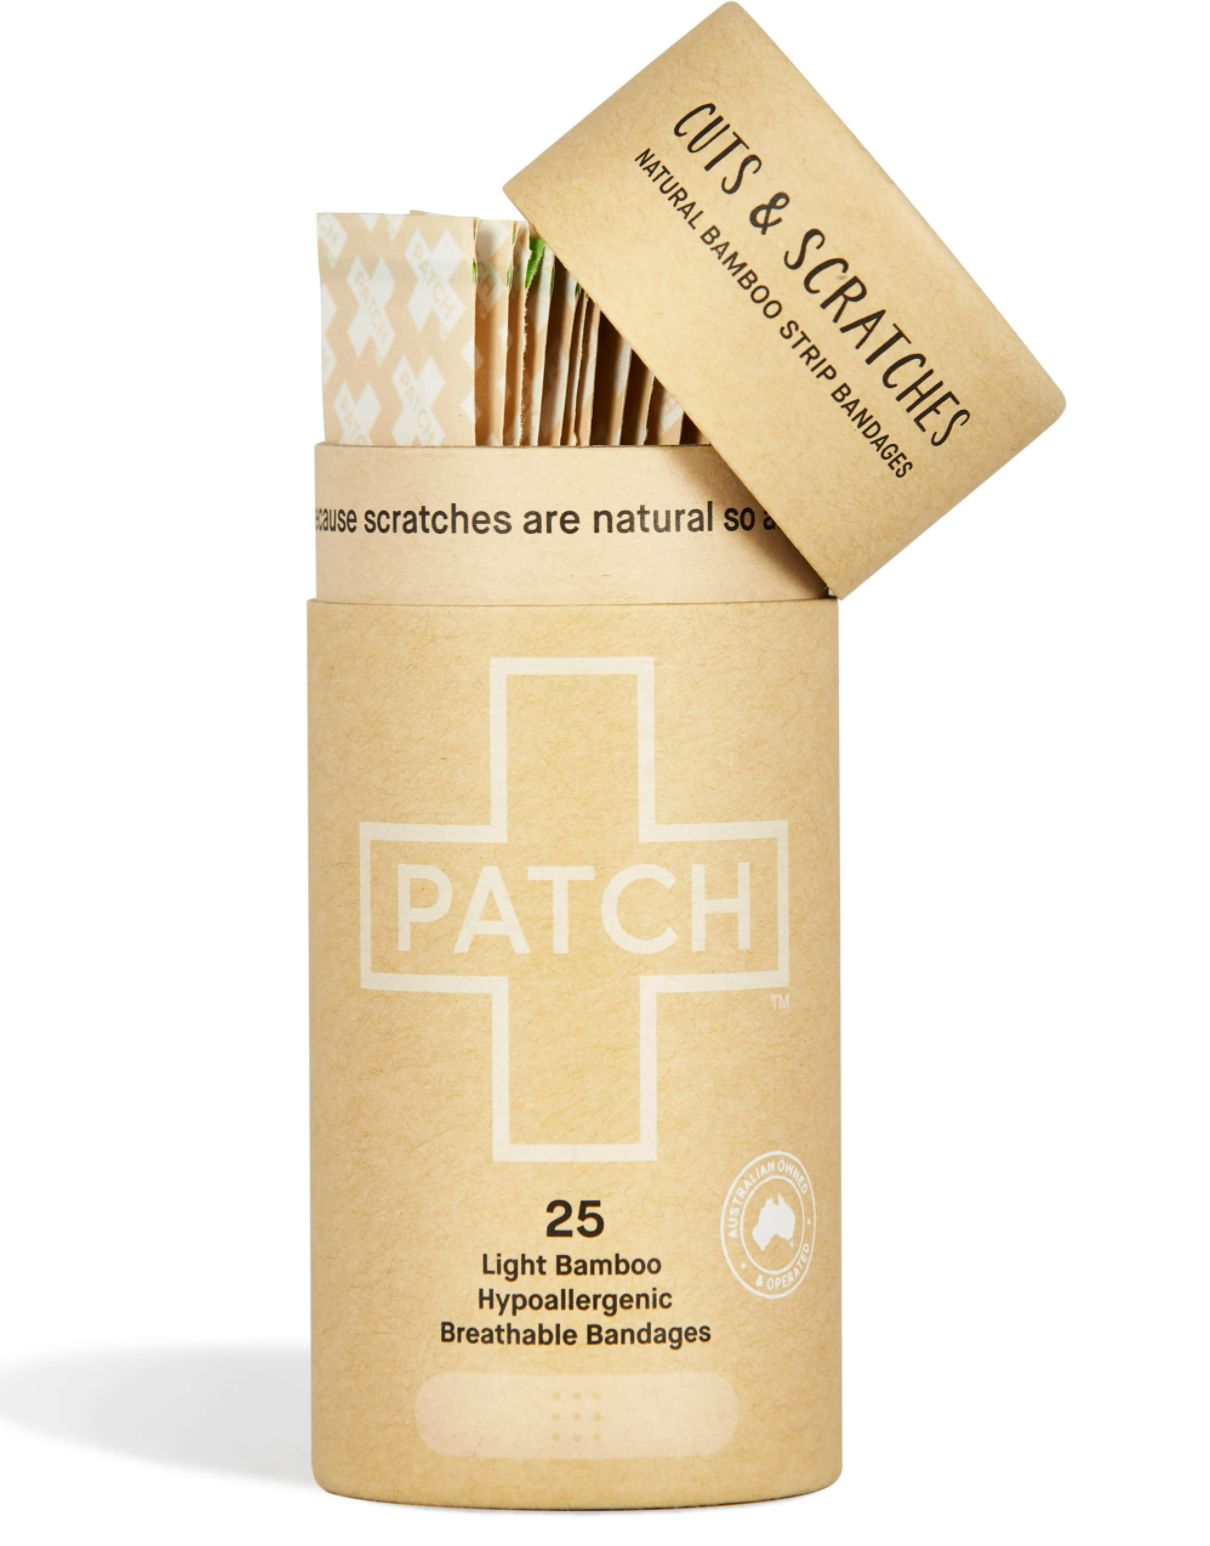 Patch Bamboo Bandages - Natural Bamboo Adhesive Strips